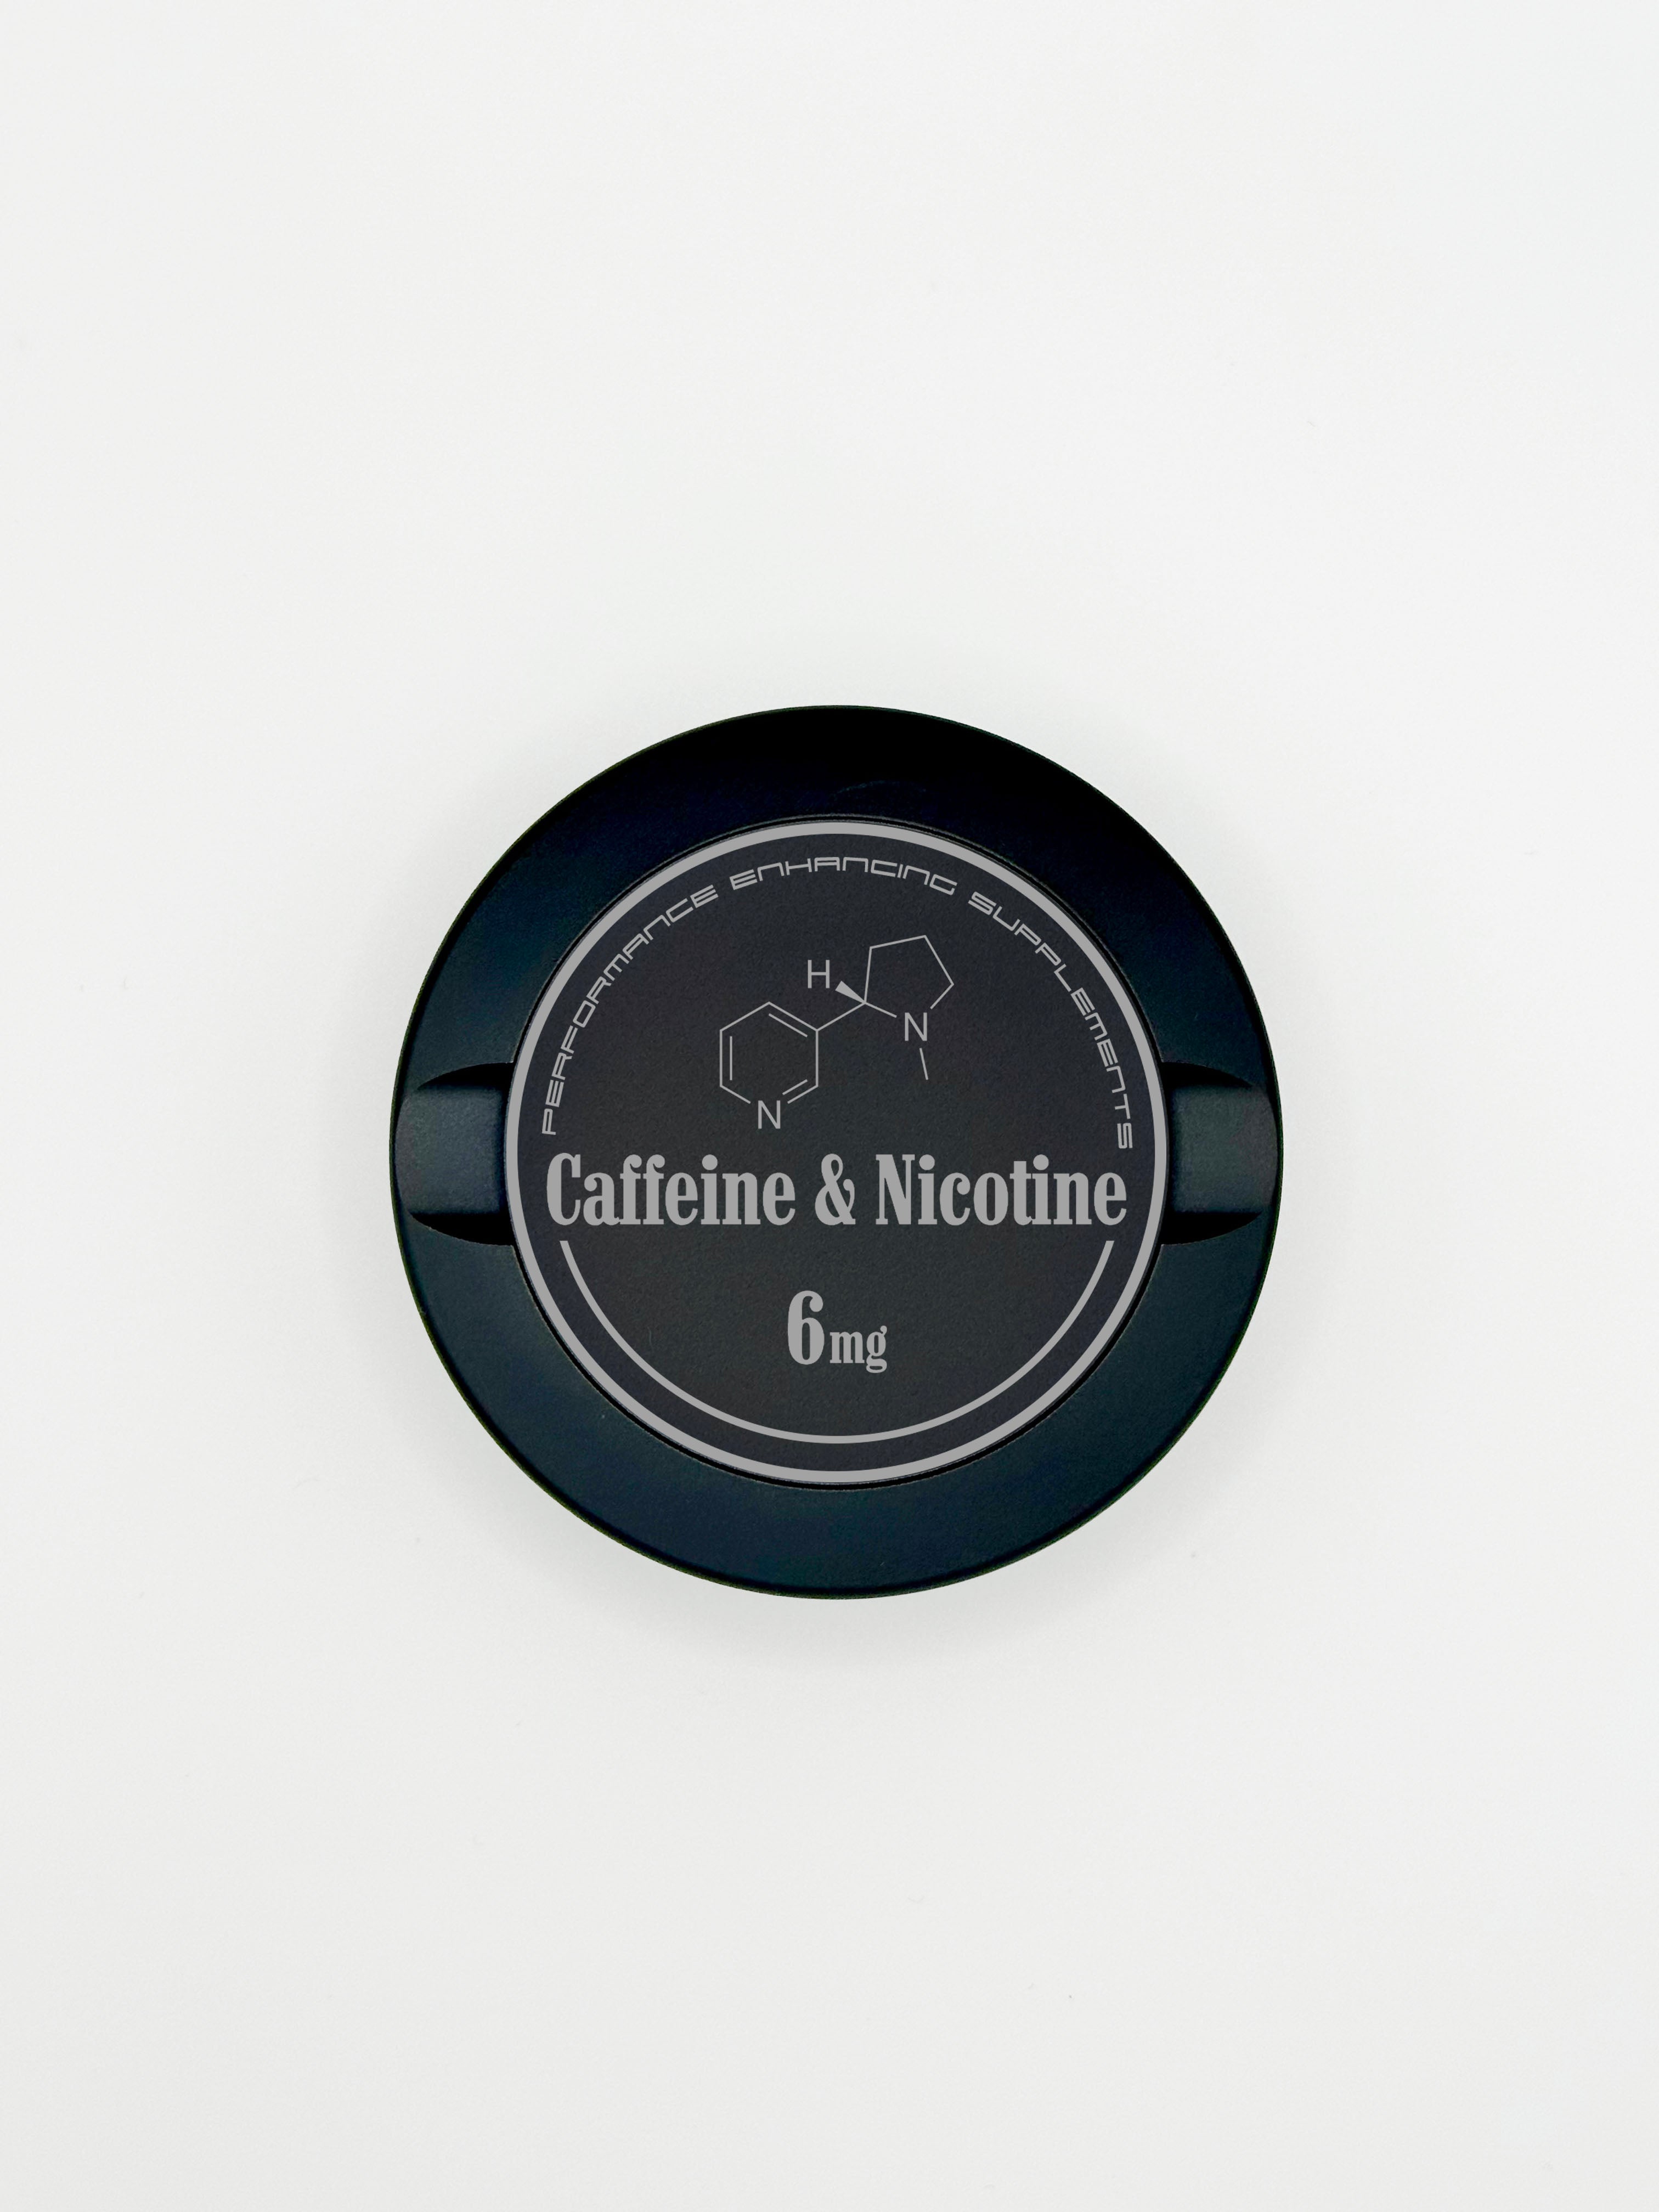 EDITION 019: CAFFEINE & NICOTINE